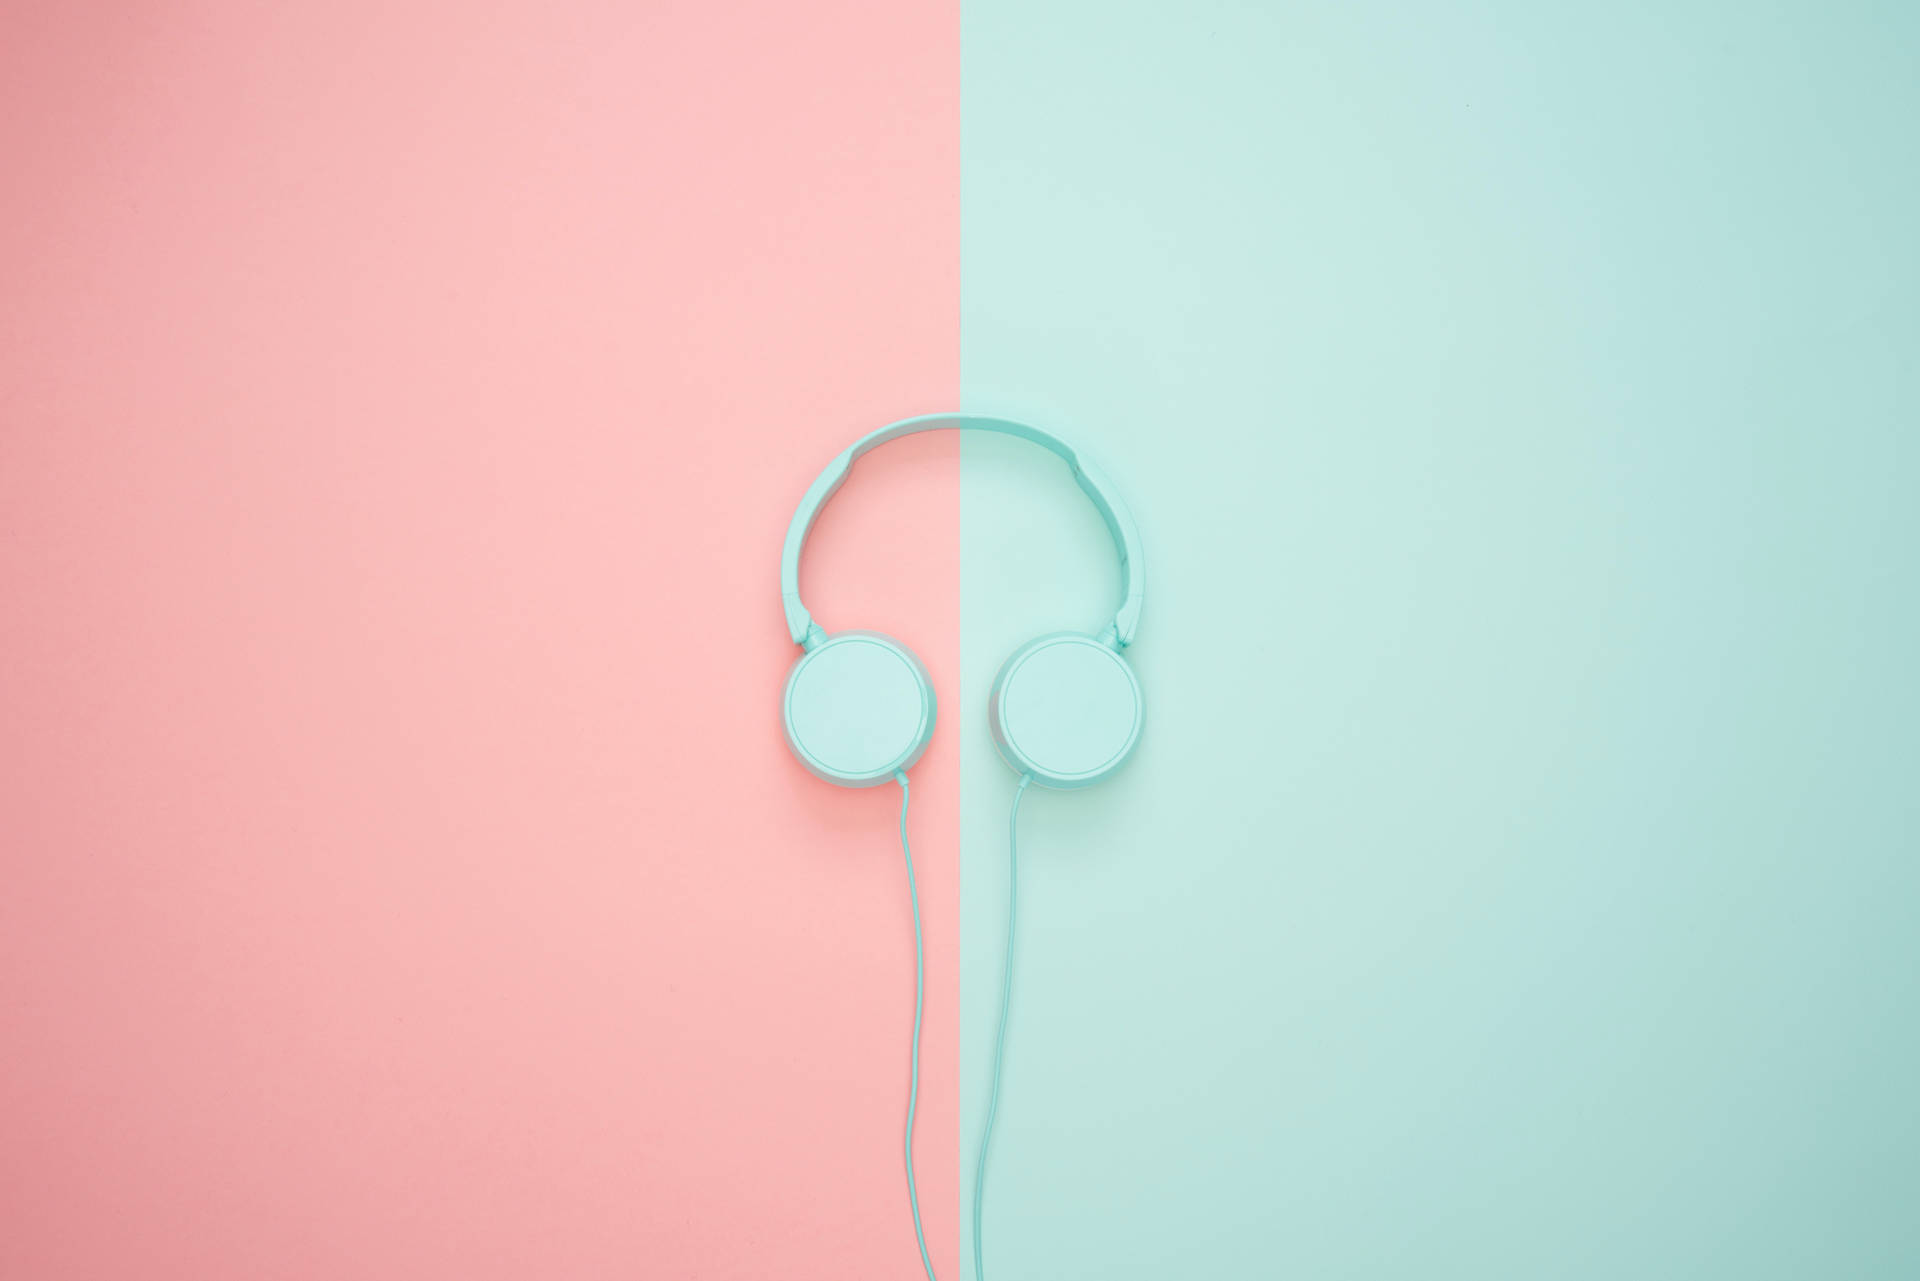 Calm Aesthetic Headphones Picture